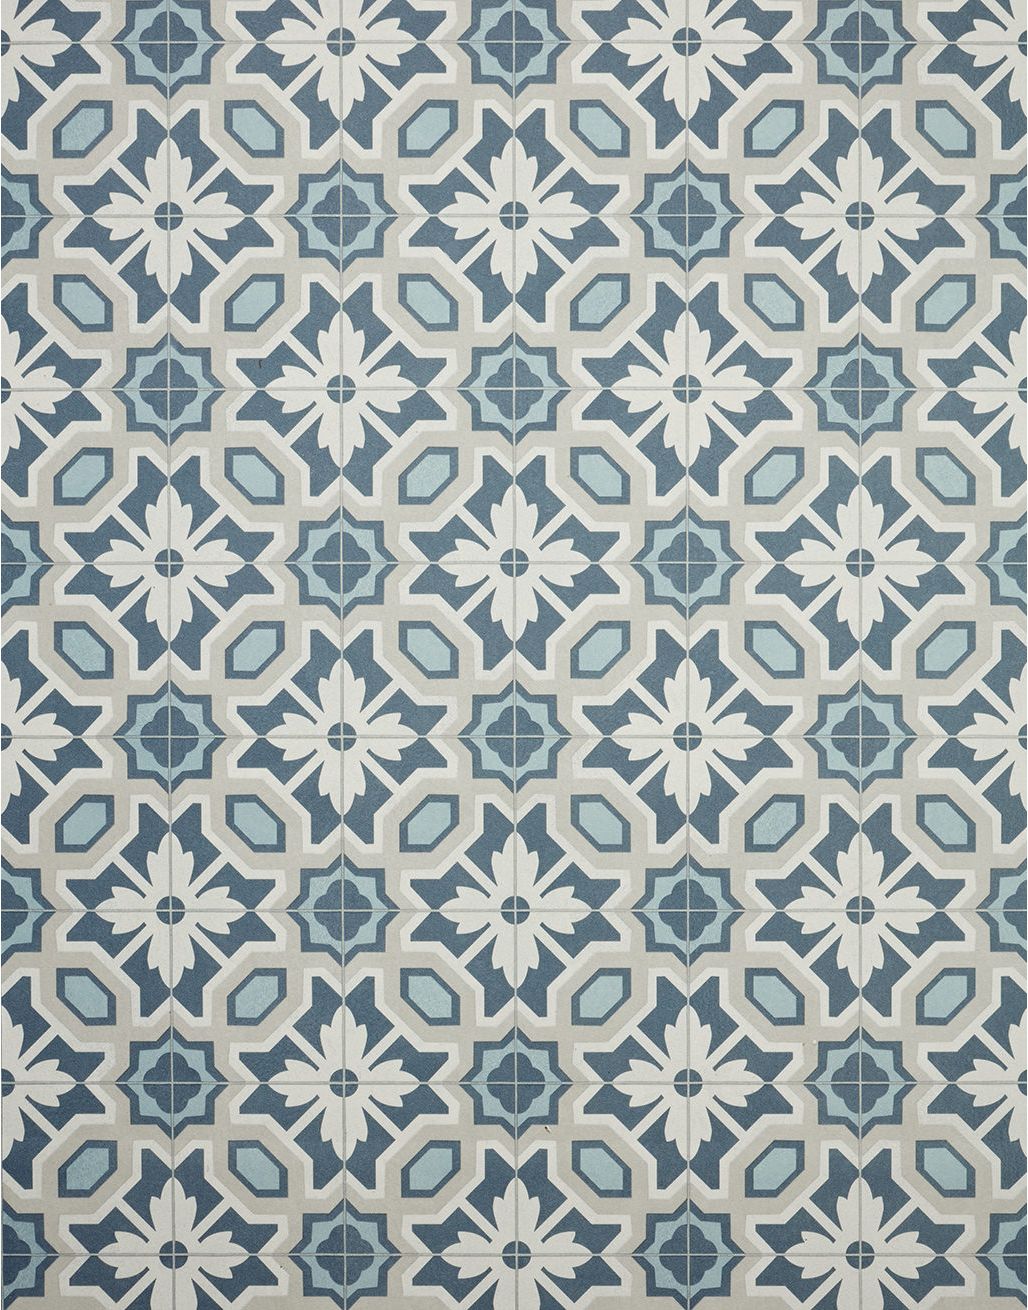 Patterned Tiles - Spanish Stone 3